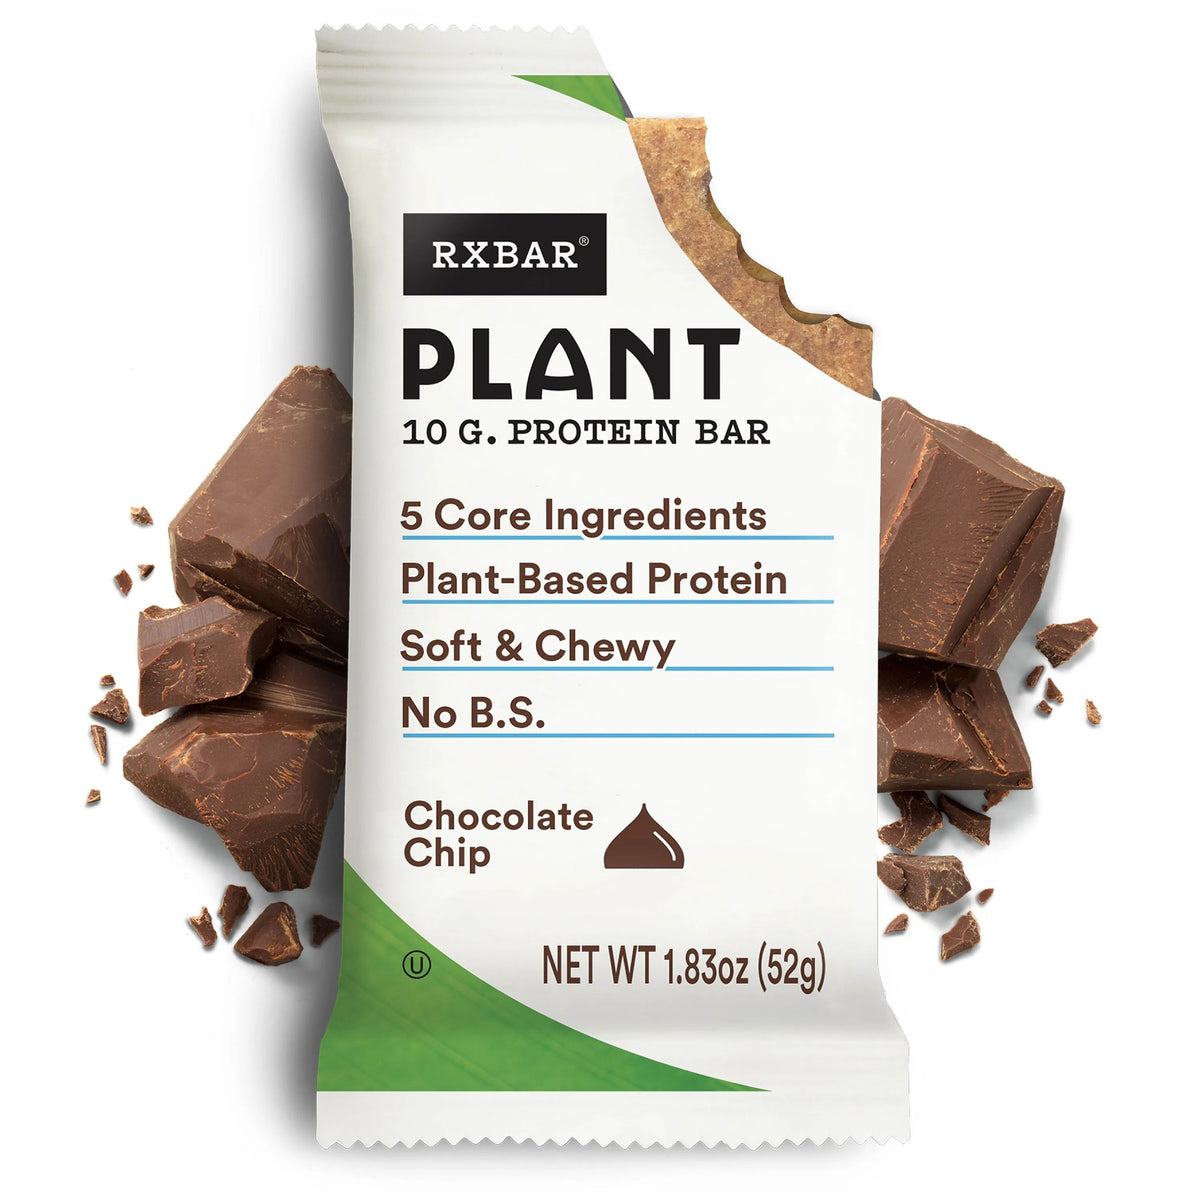 RXBAR Plant 10g. Protein Bar Chocolate Chip 52g